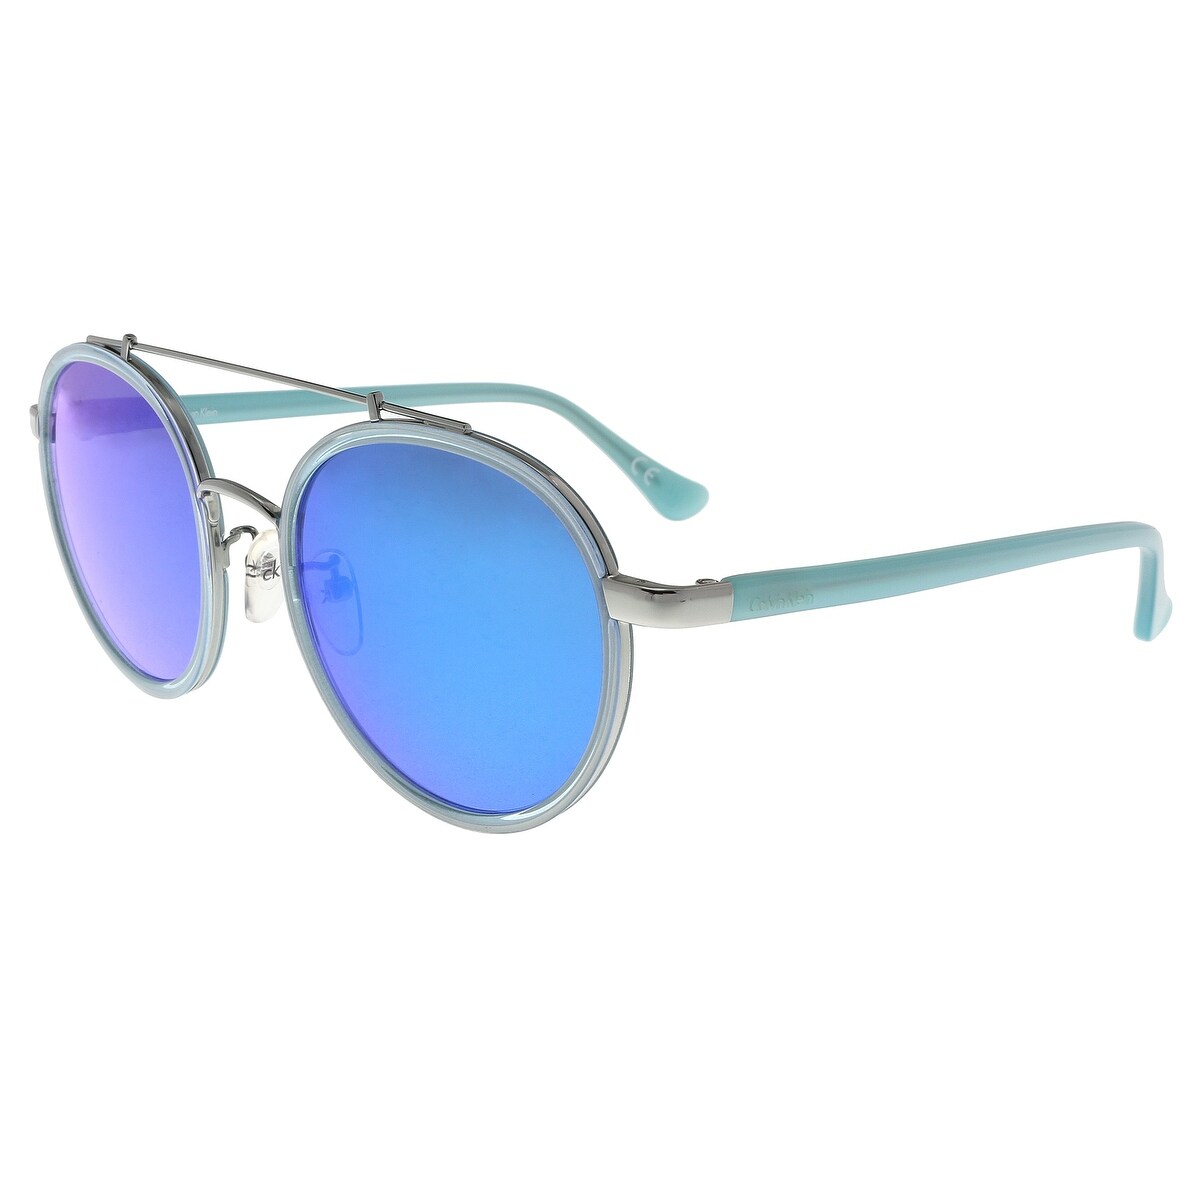 calvin klein blue sunglasses